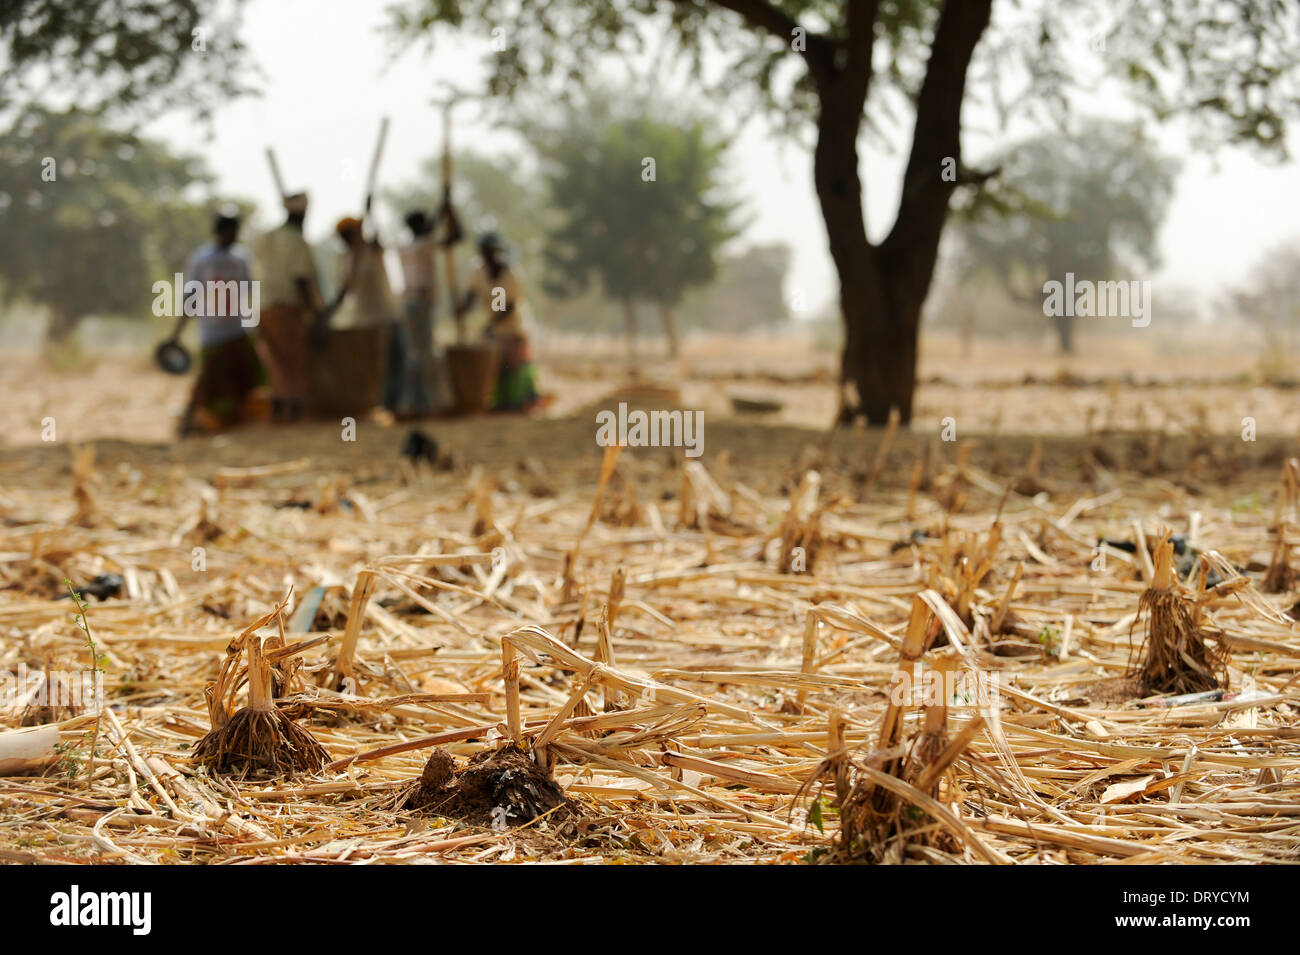 BURKINA FASO Kaya, village Korsimoro, women pound millet, the Sahel region is regularly affected by droughts and hunger Stock Photo